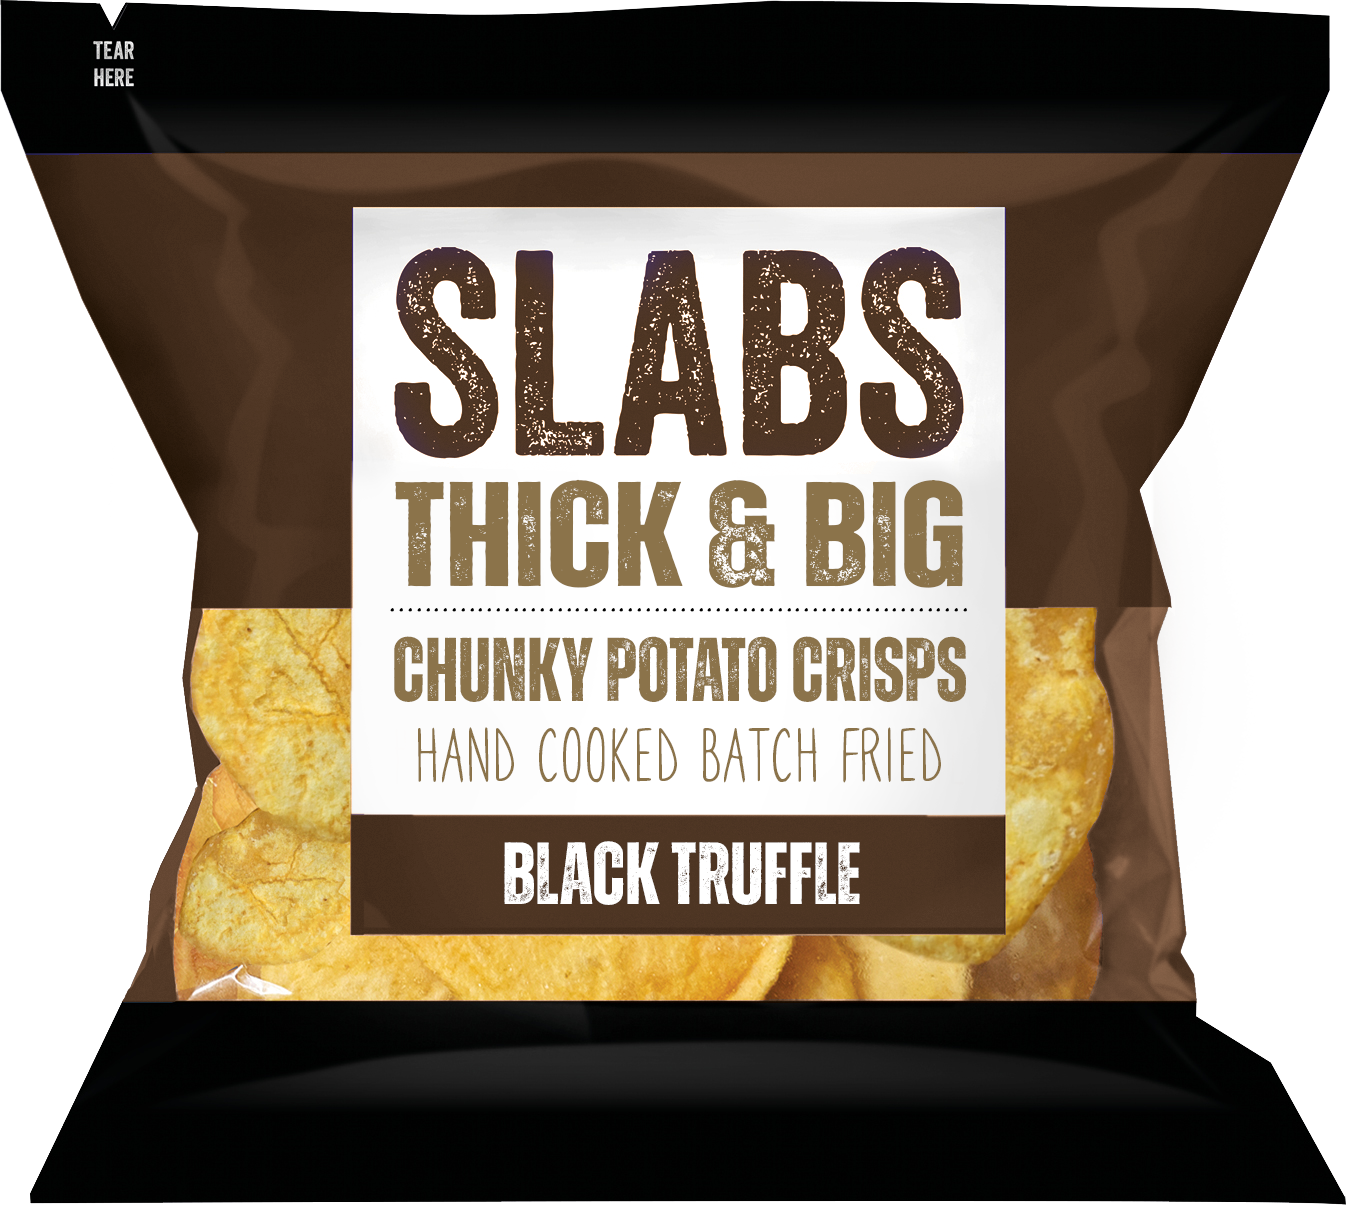 Slabs Black Truffle